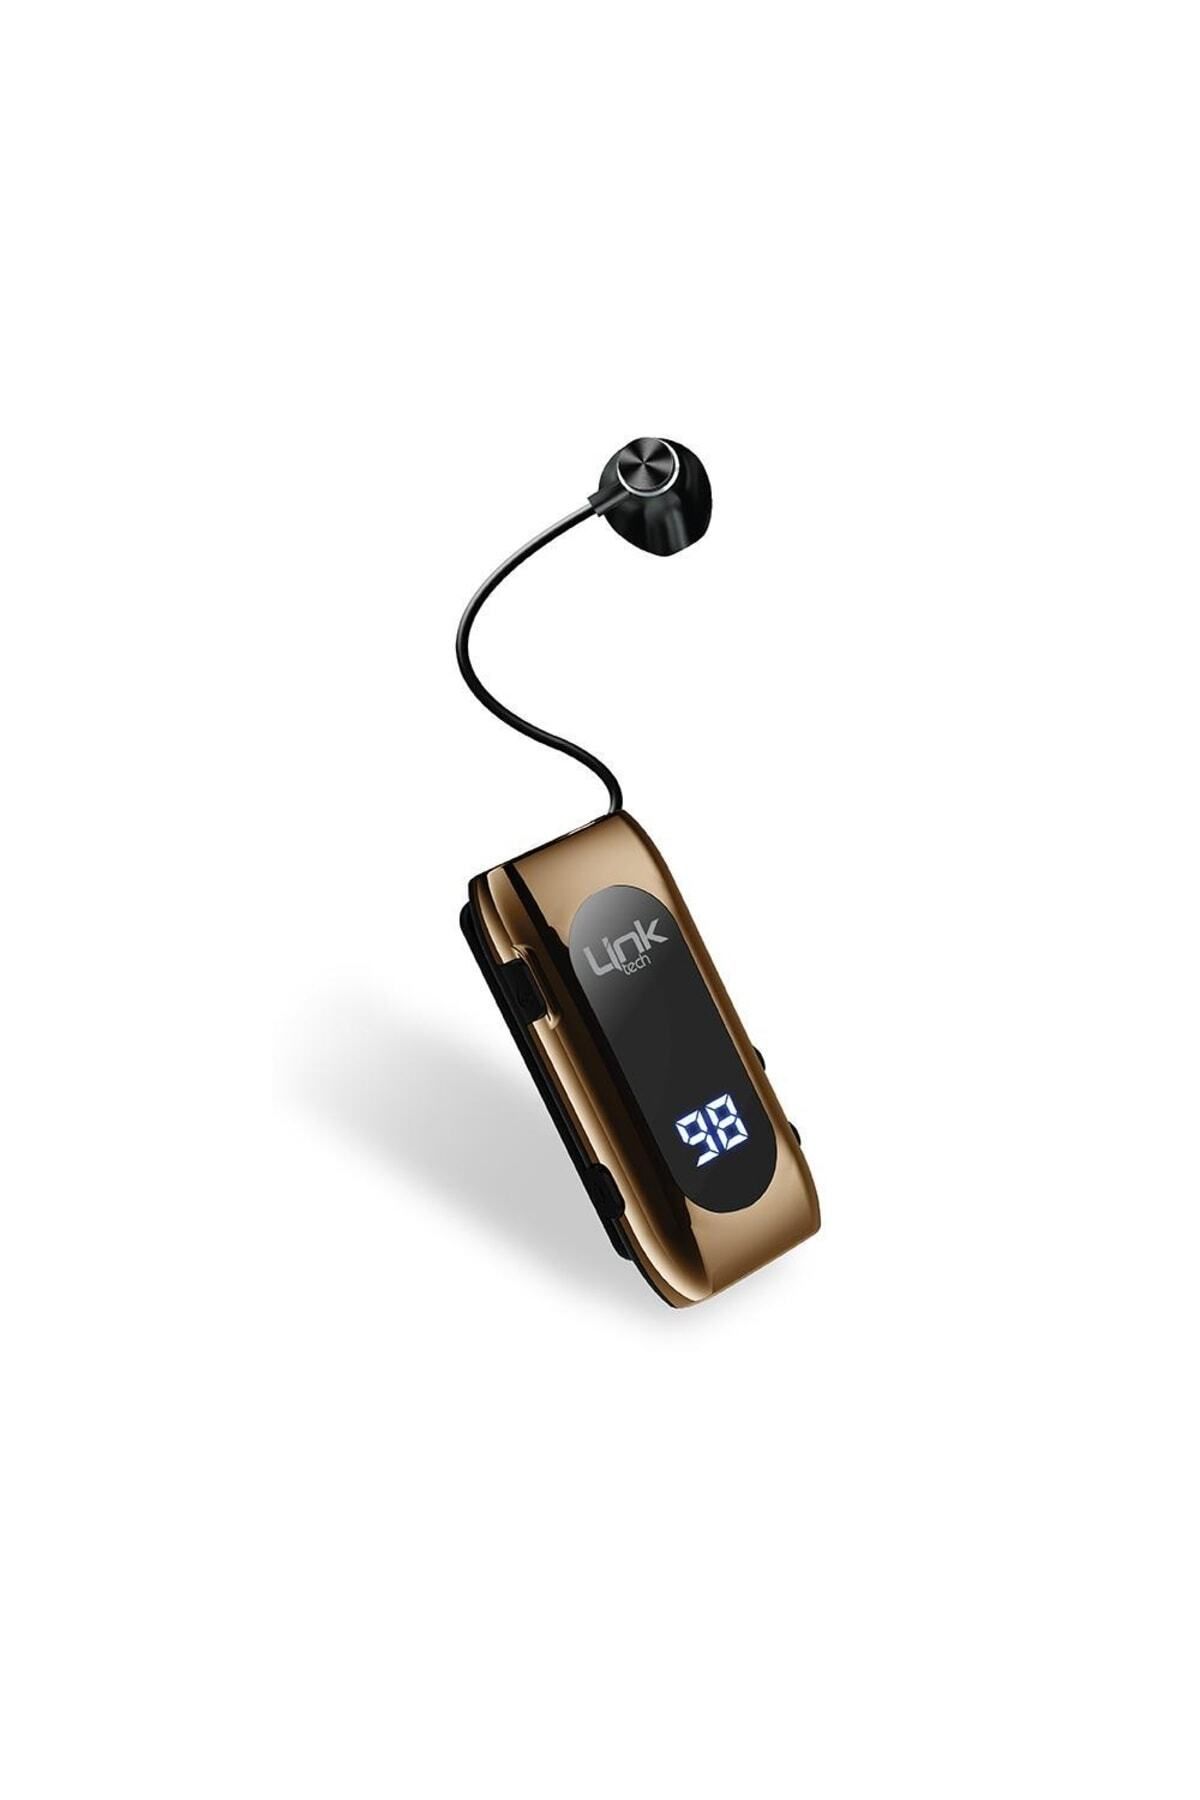 Linktech V80 Pro Makaralı Titreşimli Bluetooth Kulaklık